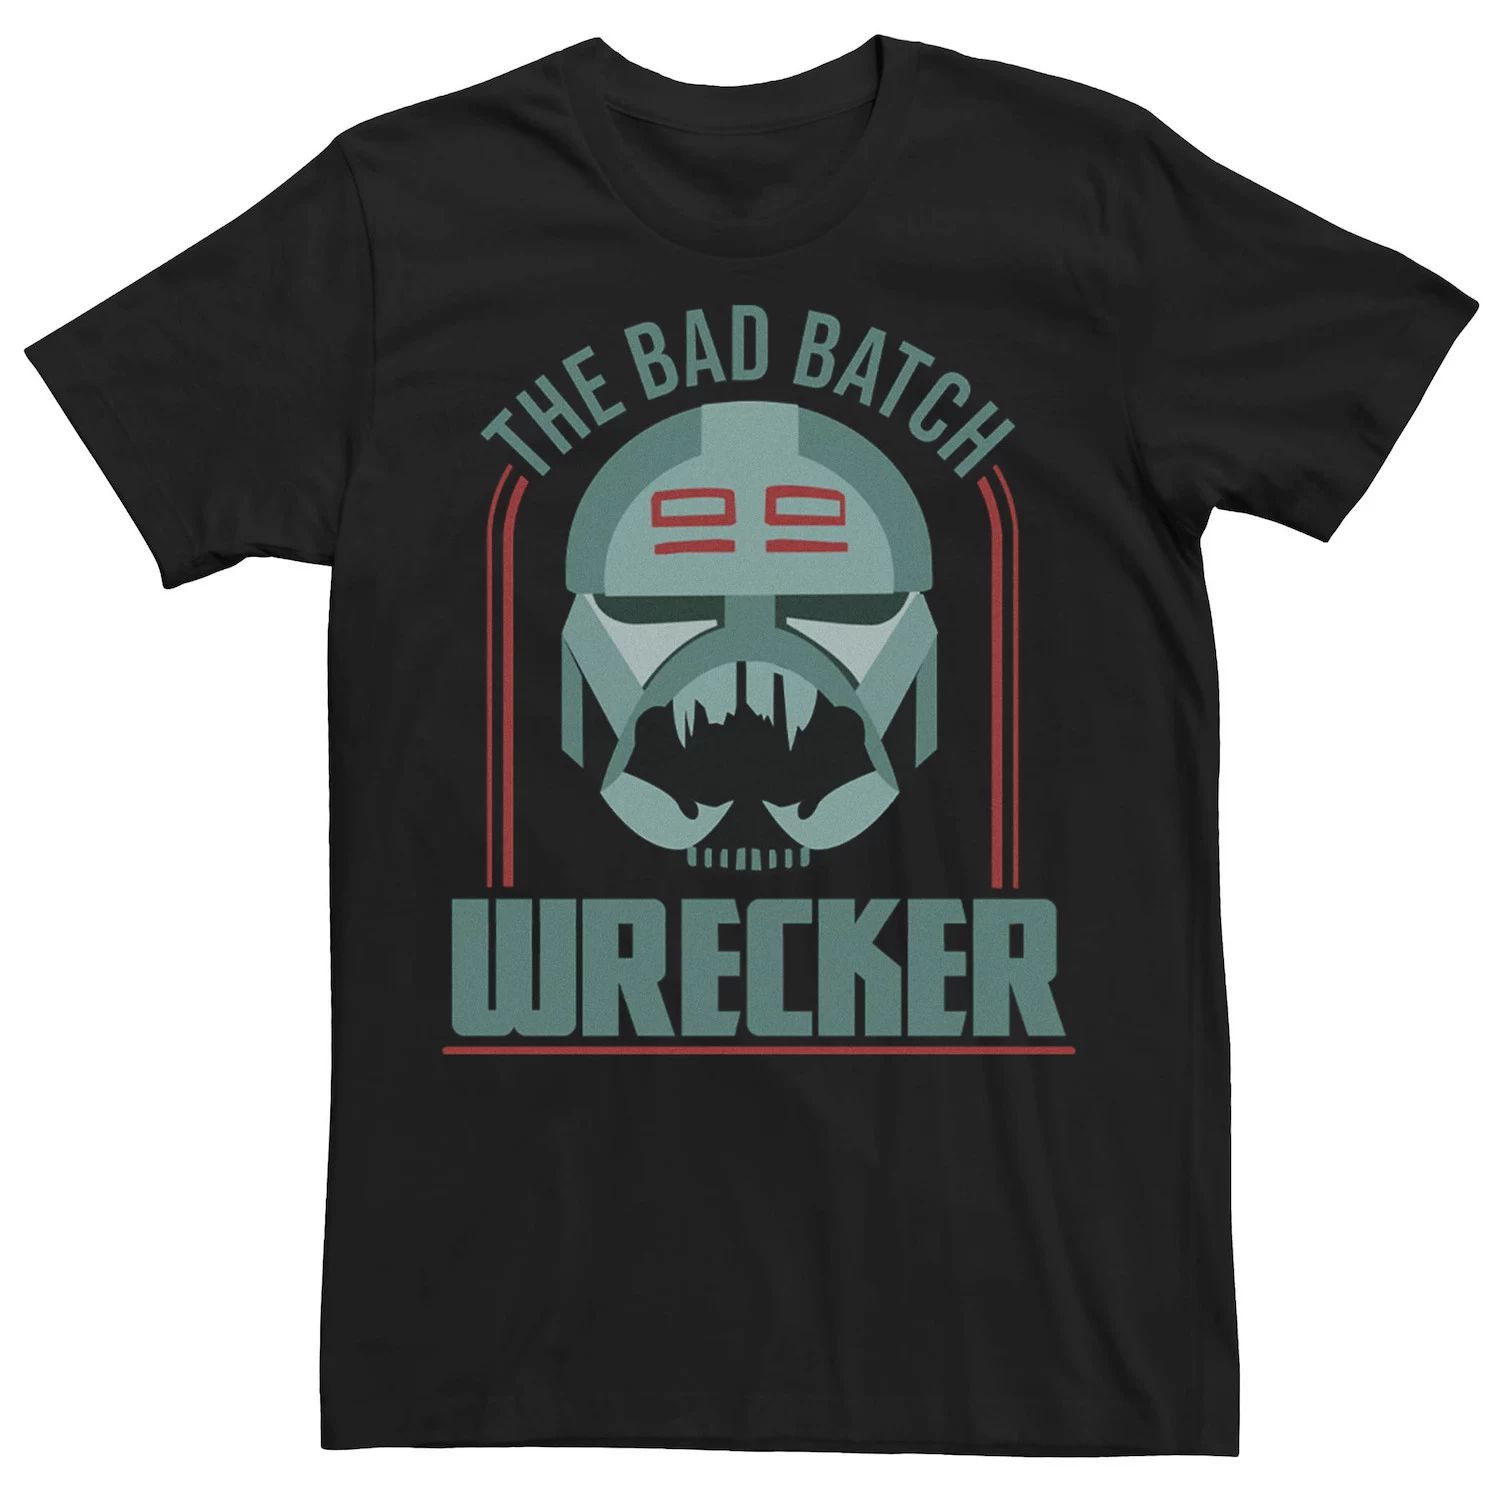 Мужская футболка: The Clone Wars The Bad Batch Wrecker Star Wars конструктор star wars оправдатель star wars the bad batch s2